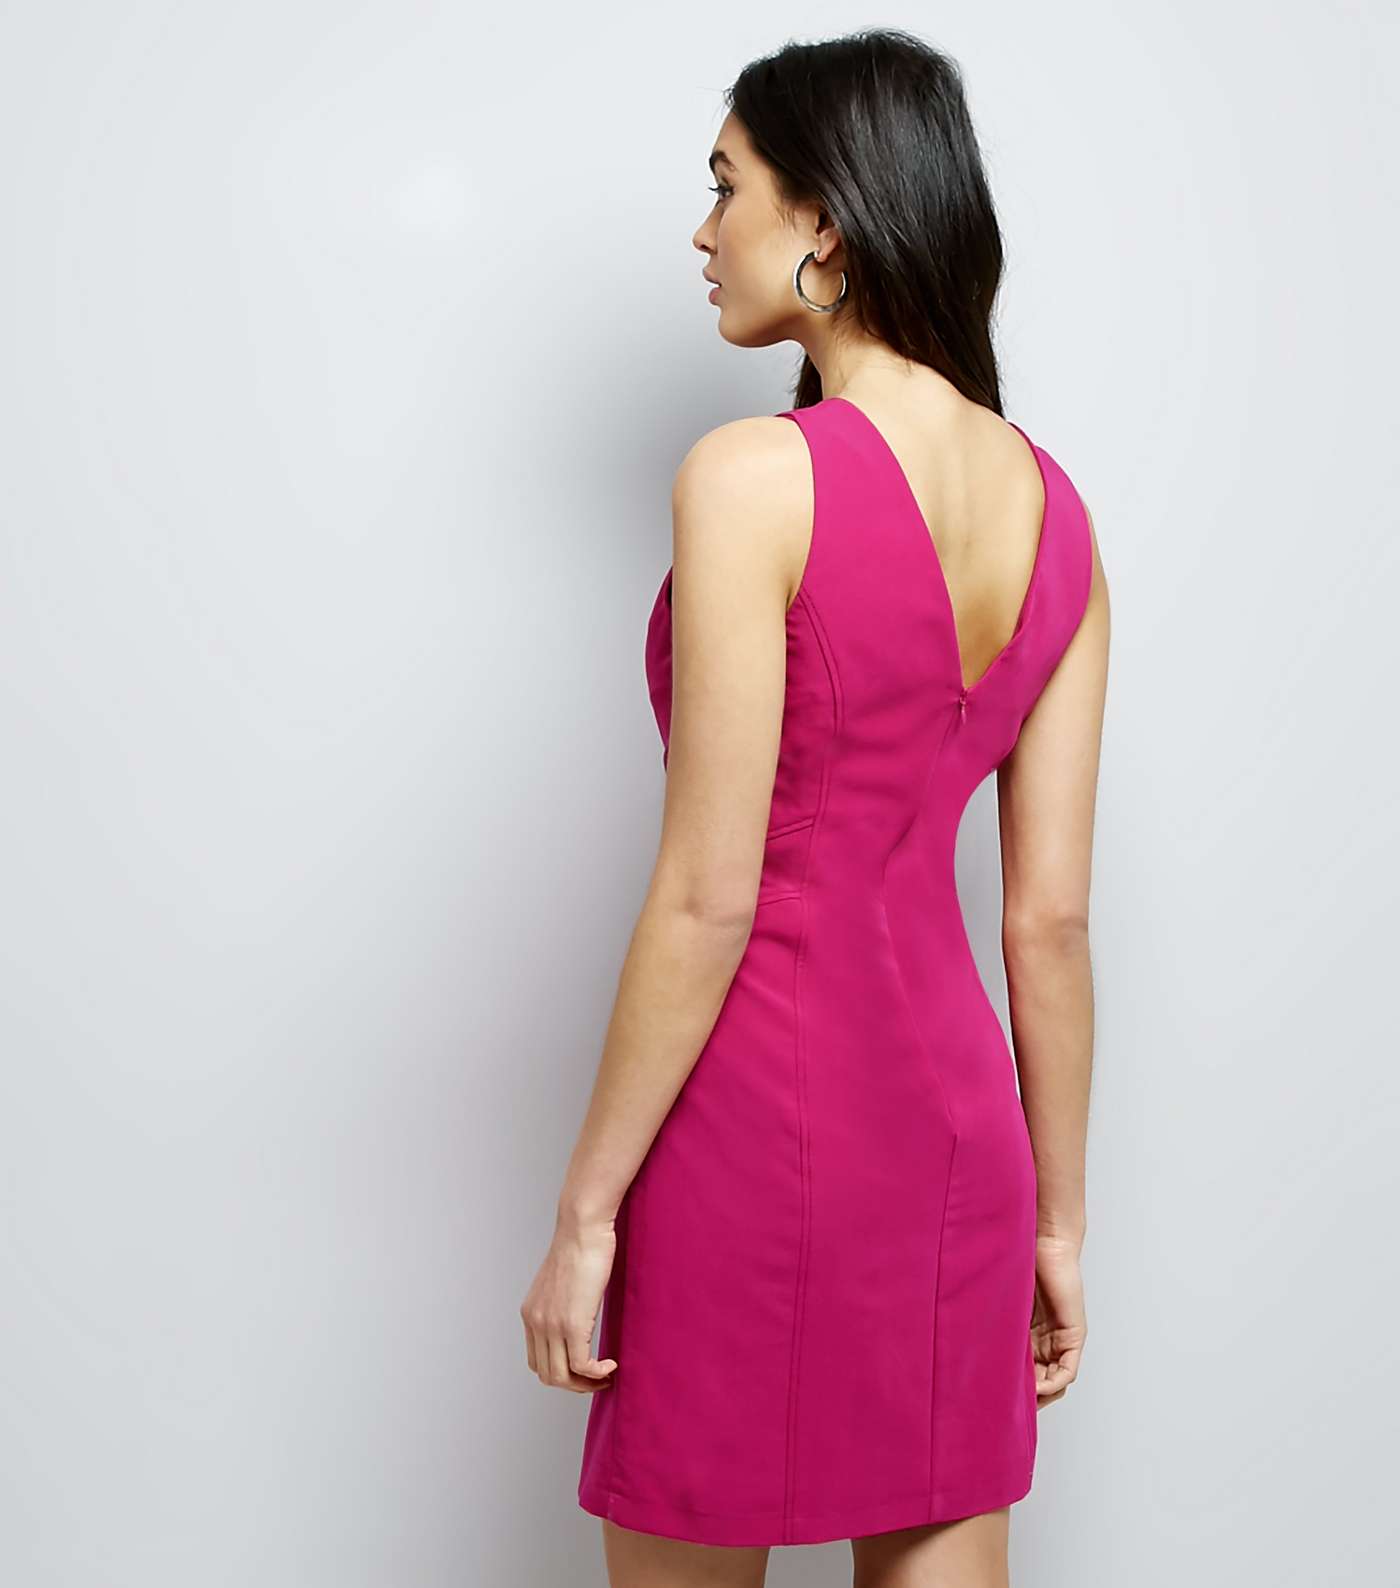 Bright Pink Suit Dress Image 3